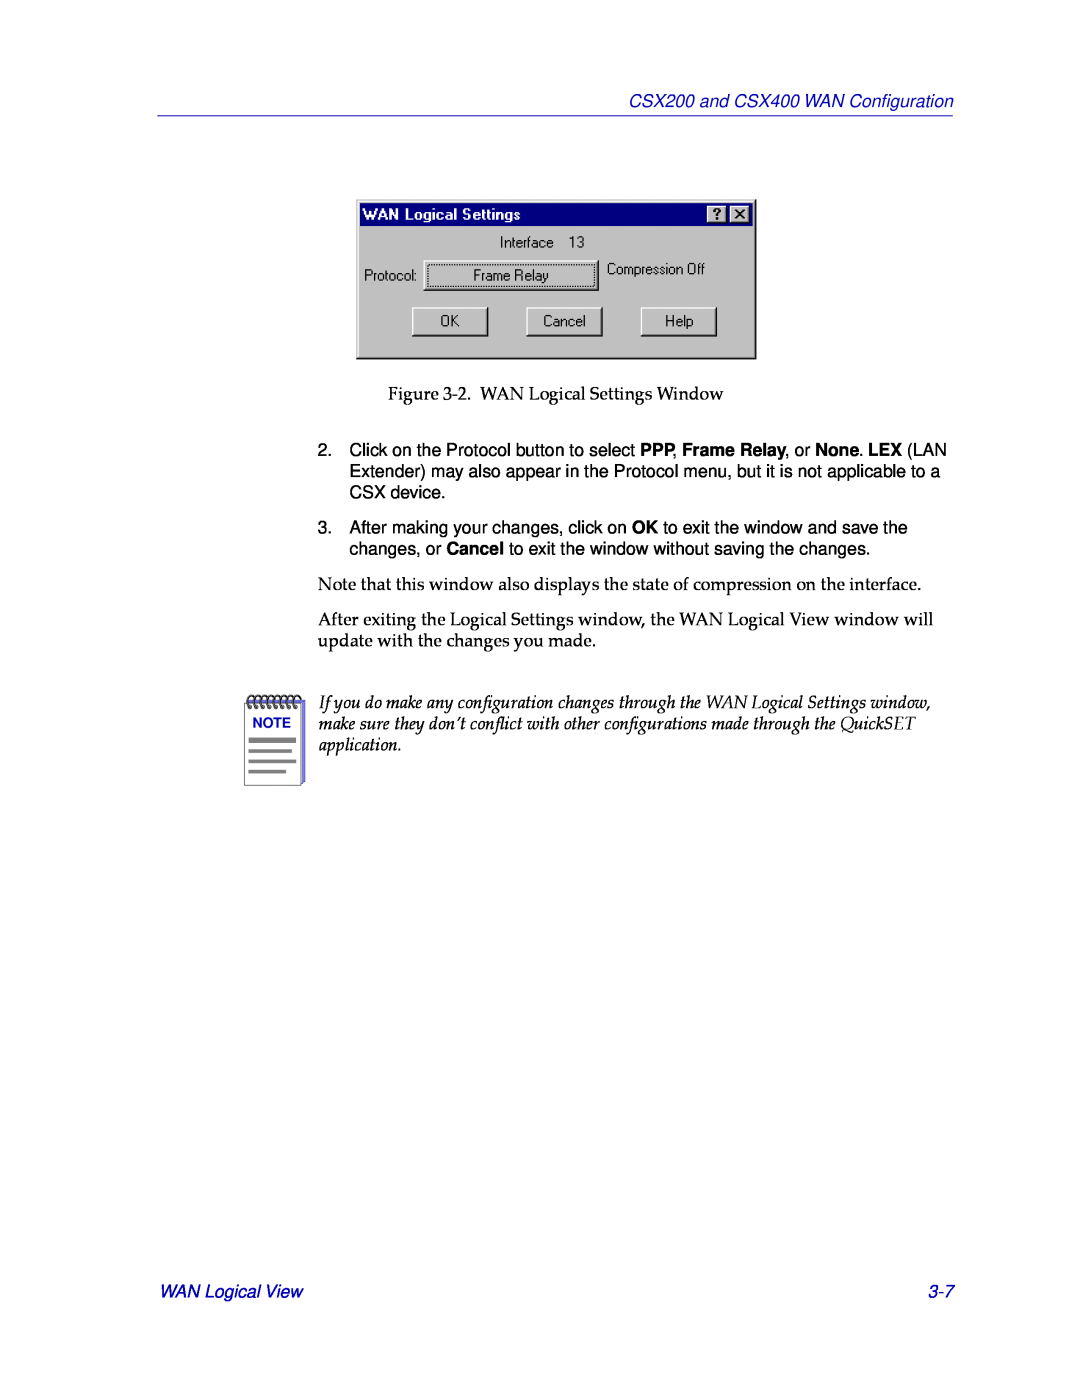 Cabletron Systems manual CSX200 and CSX400 WAN Conﬁguration, 2. WAN Logical Settings Window, WAN Logical View 